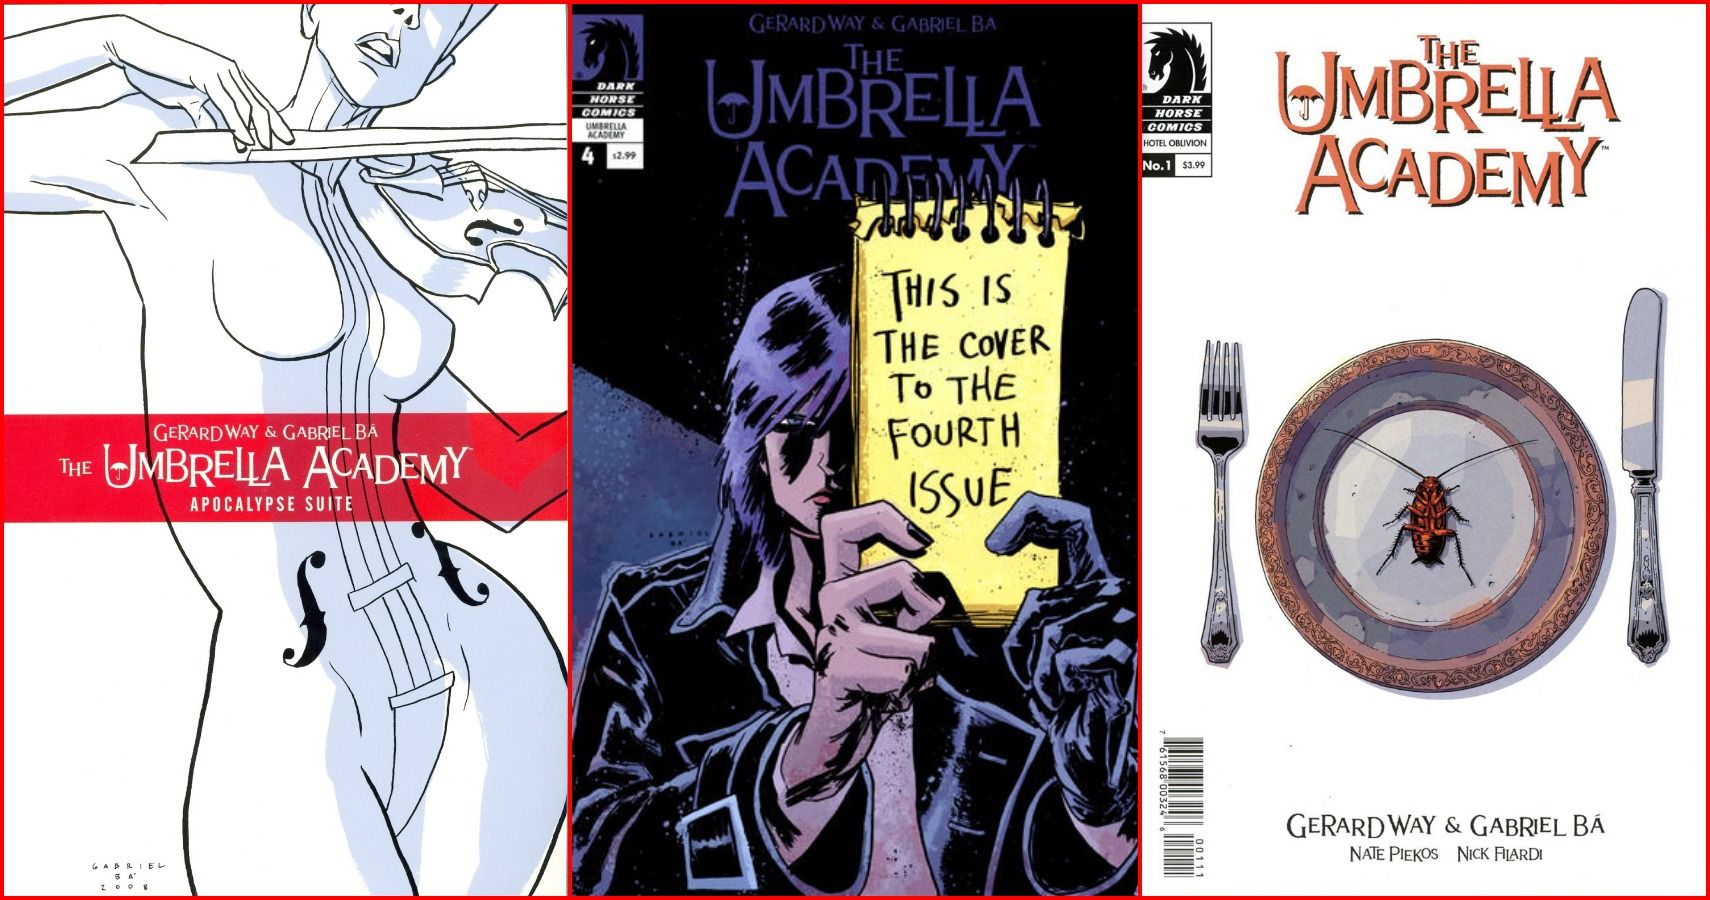 The Umbrella Academy comic book covers.